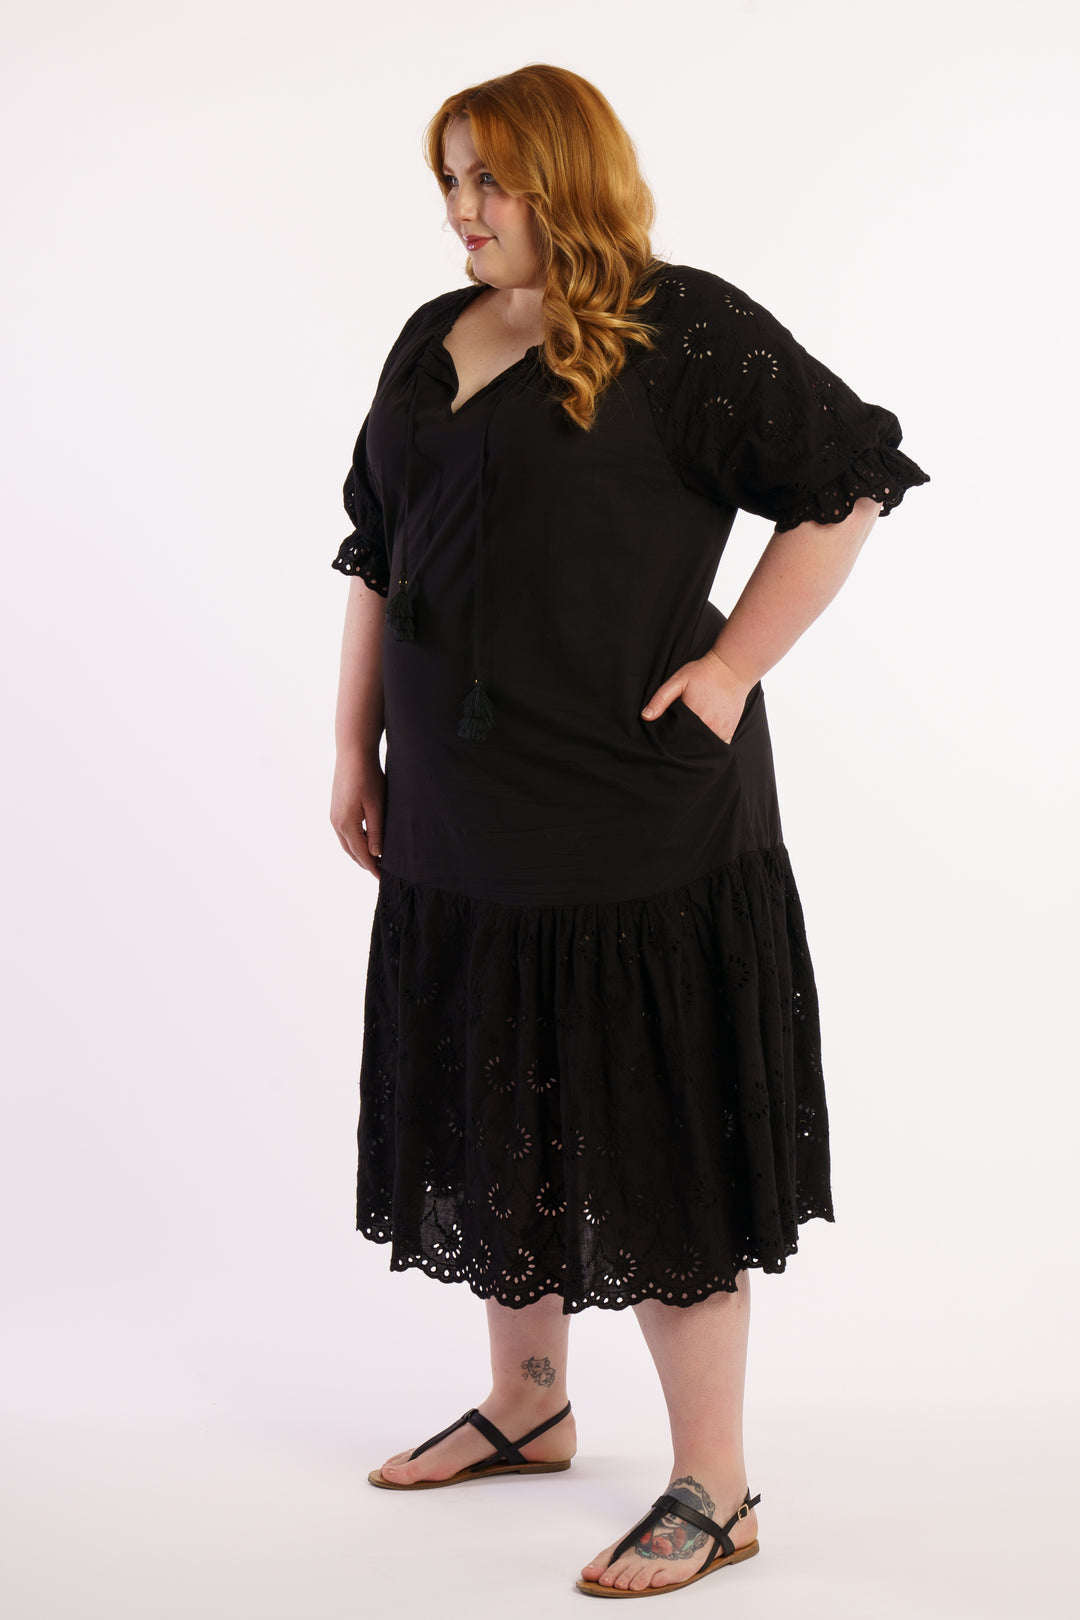 Summer Breeze Broidery Dress - Black - LAST ONES -  S (14/16)